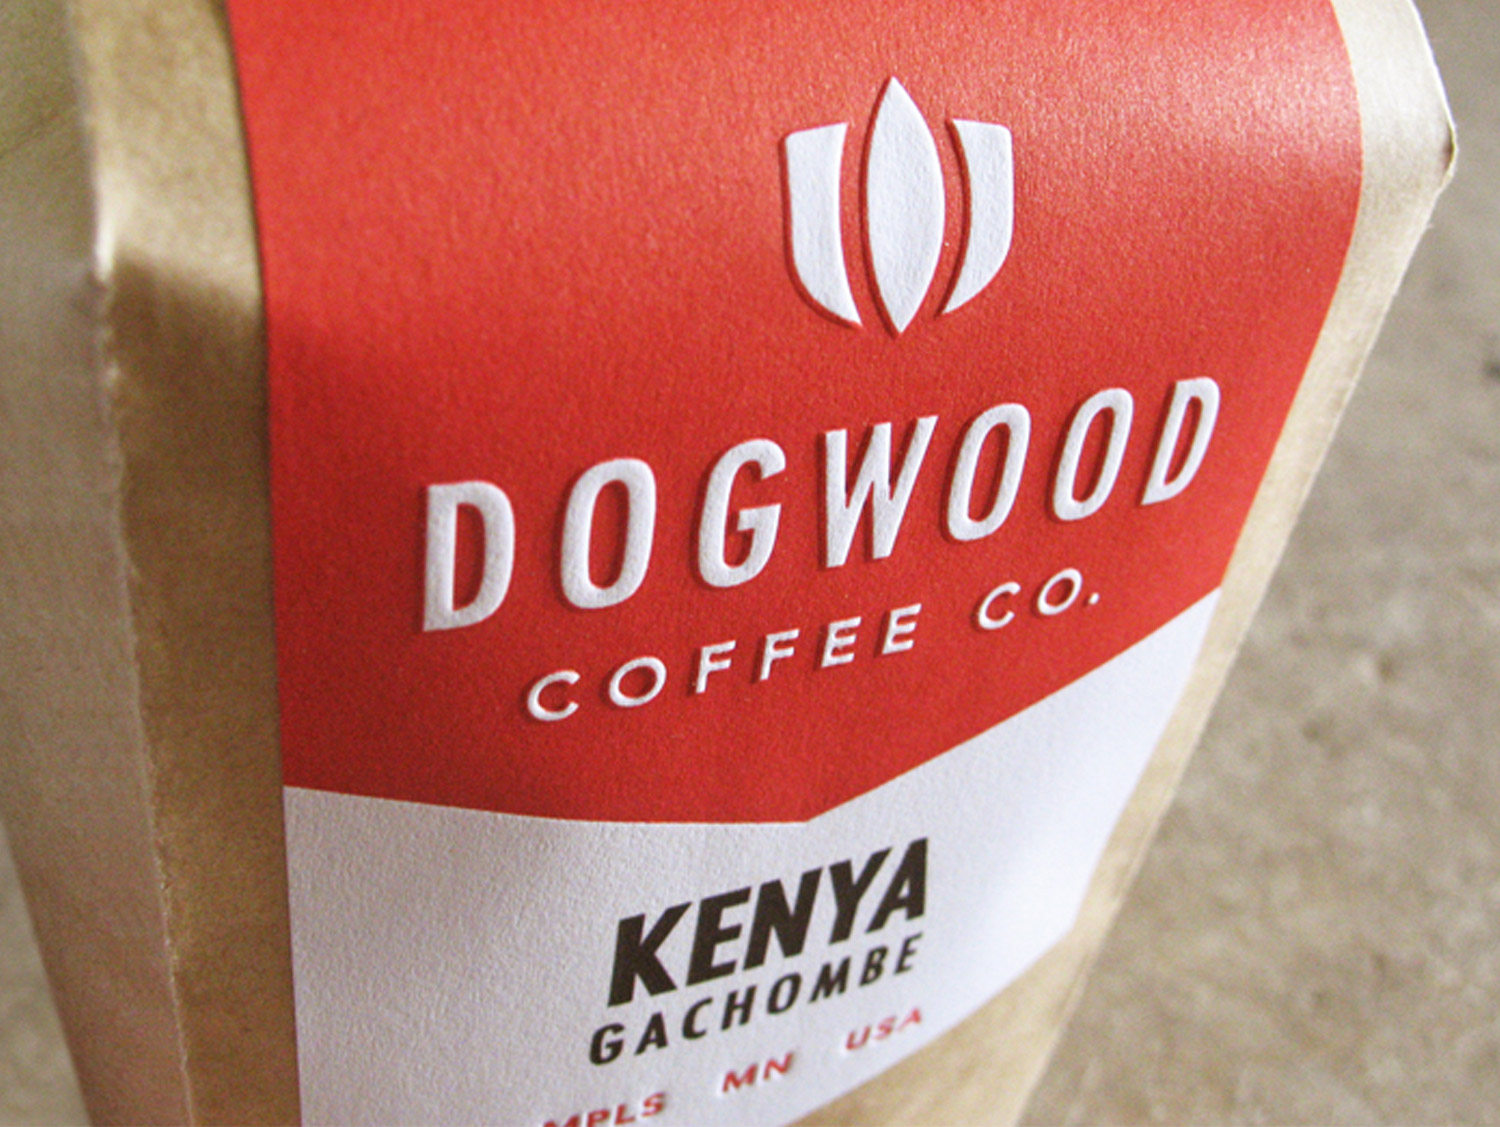 Dogwood-Coffee-Co-13-Packaging-03.jpg